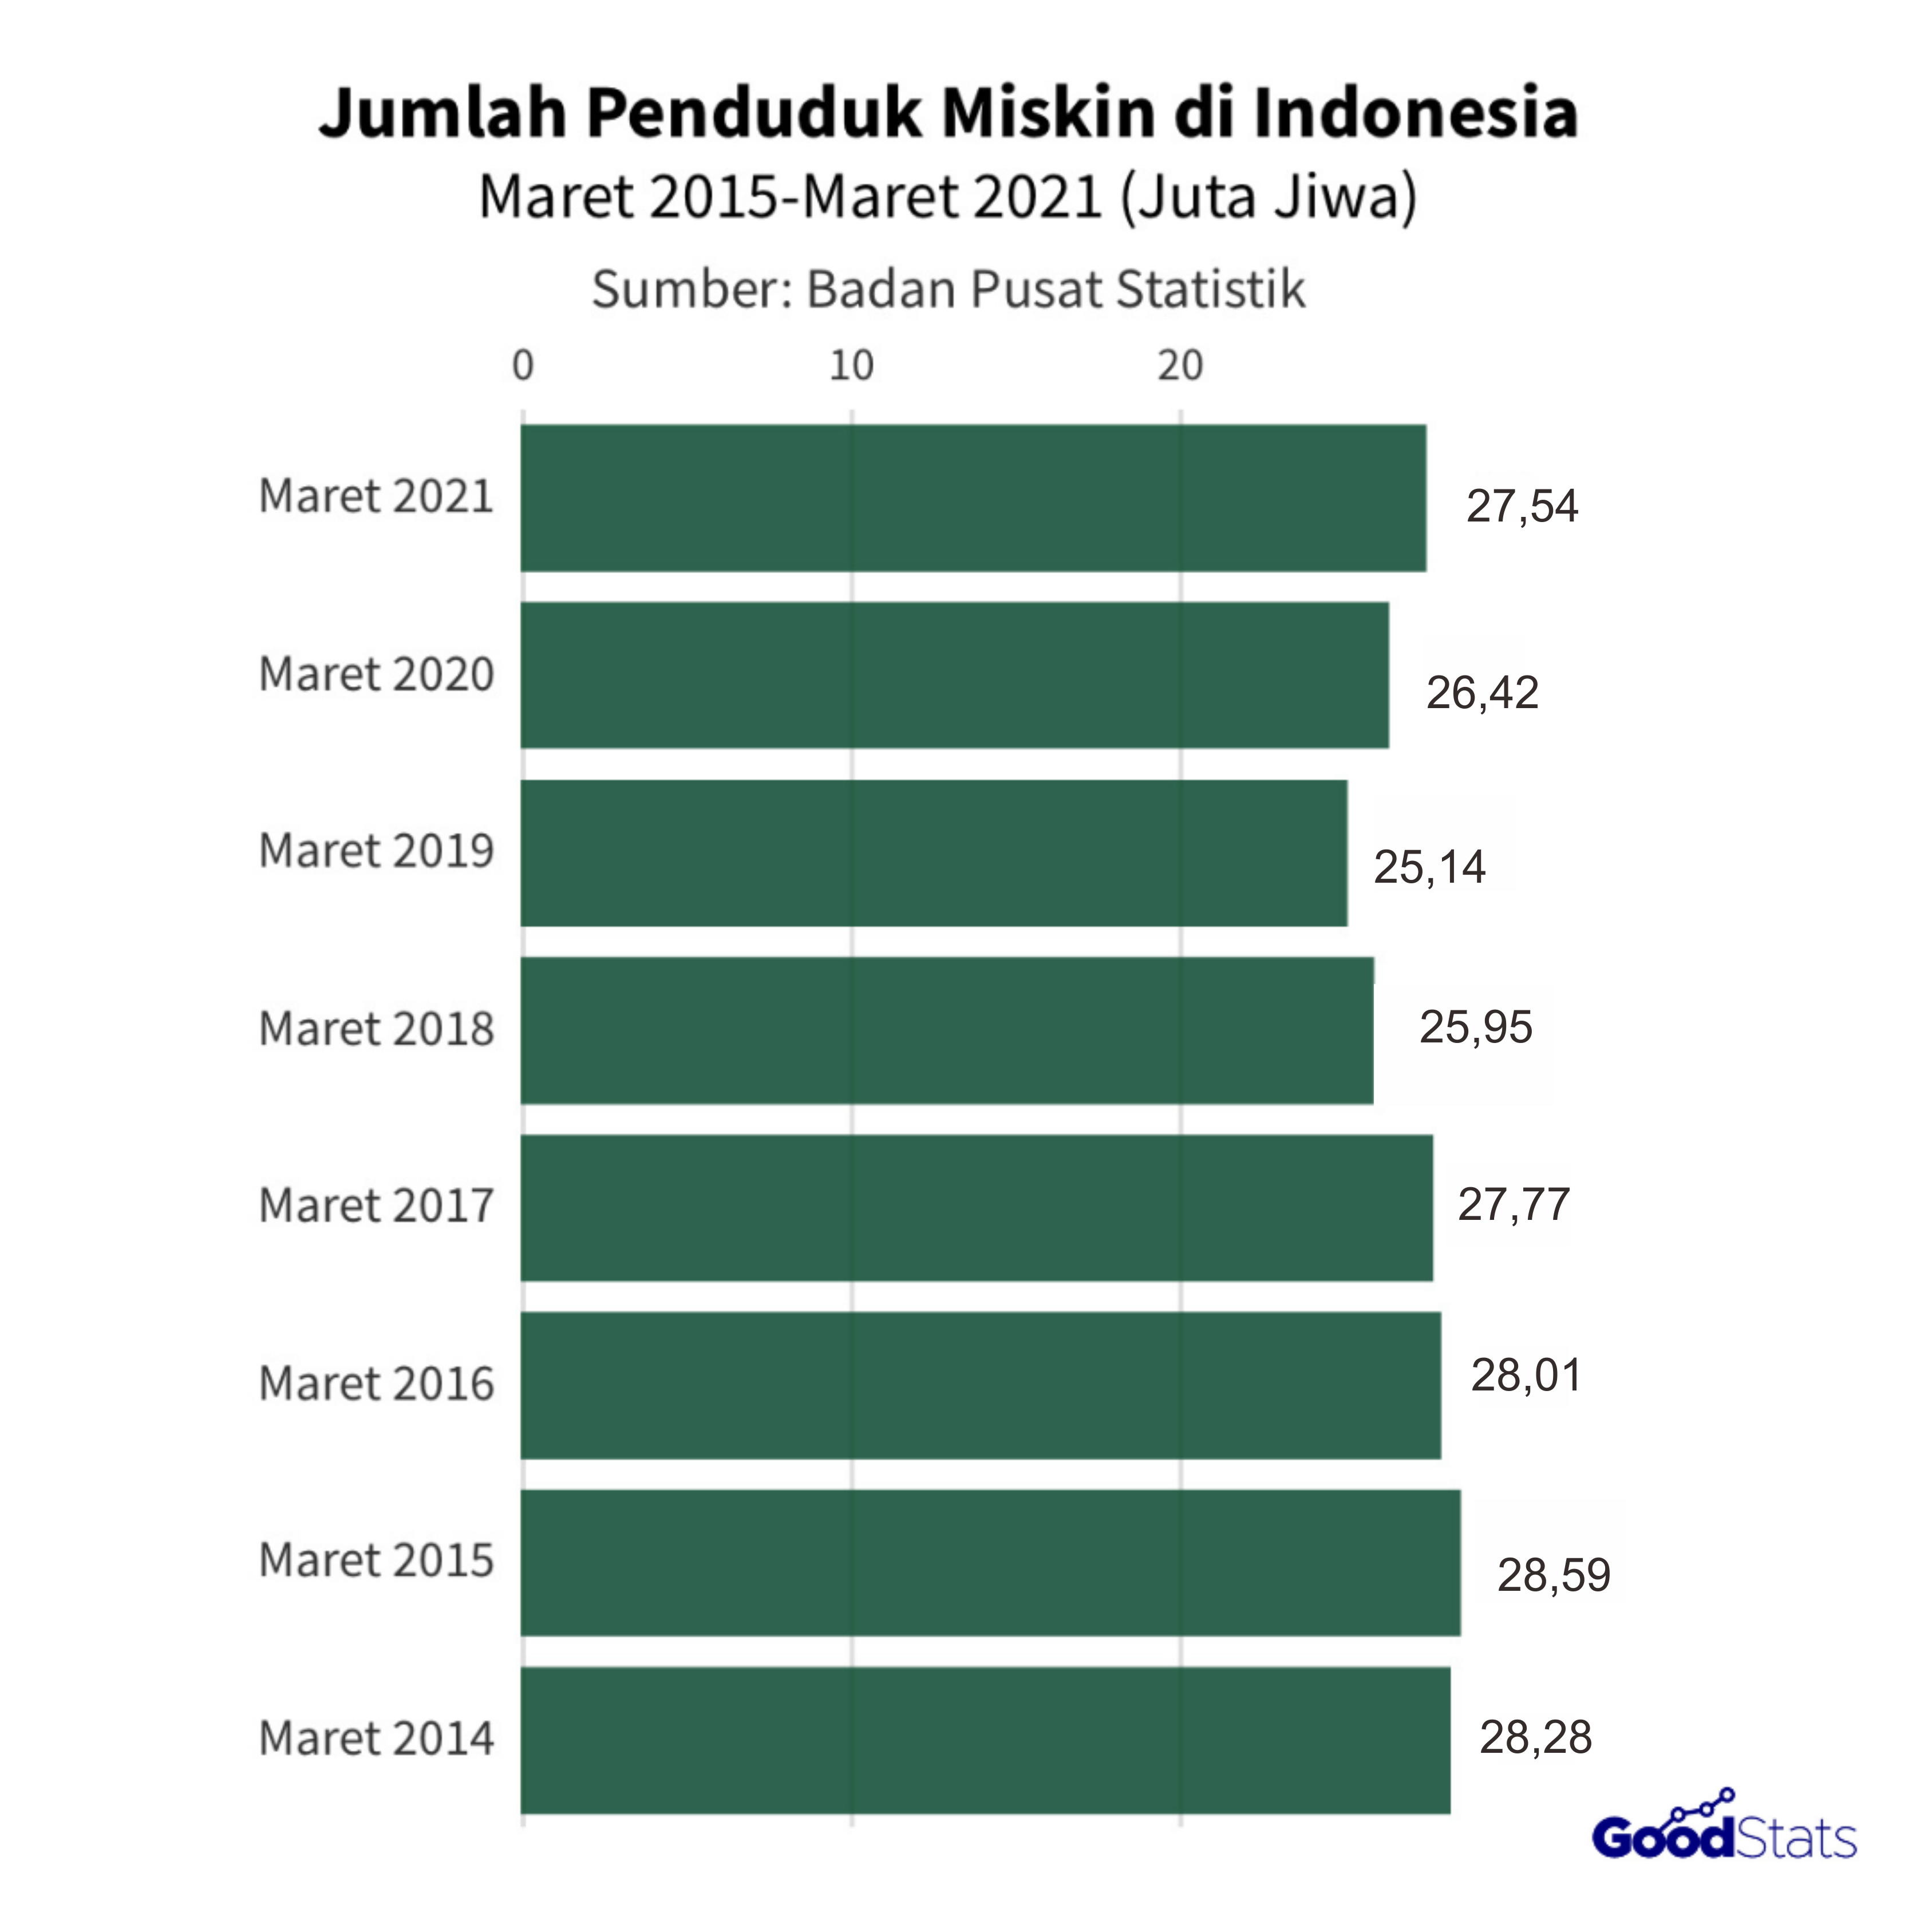 Jumlah penduduk miskin di Indonesia 2014-2021 | GoodStats